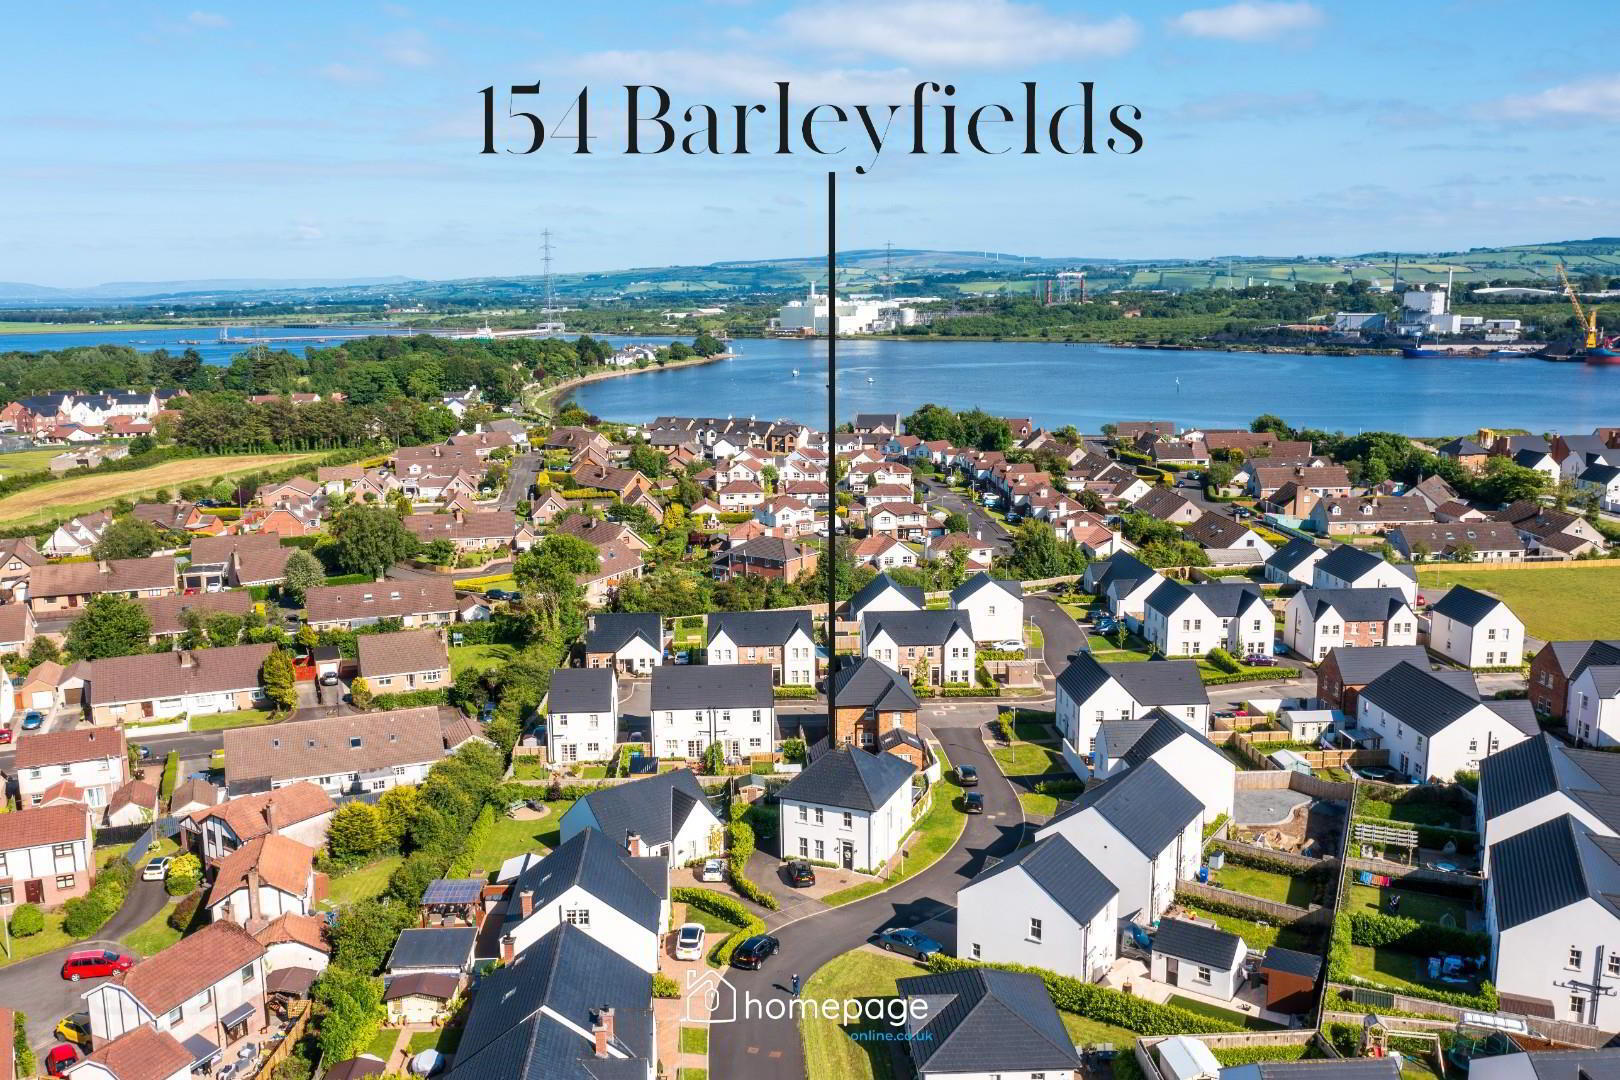 154 Barleyfields